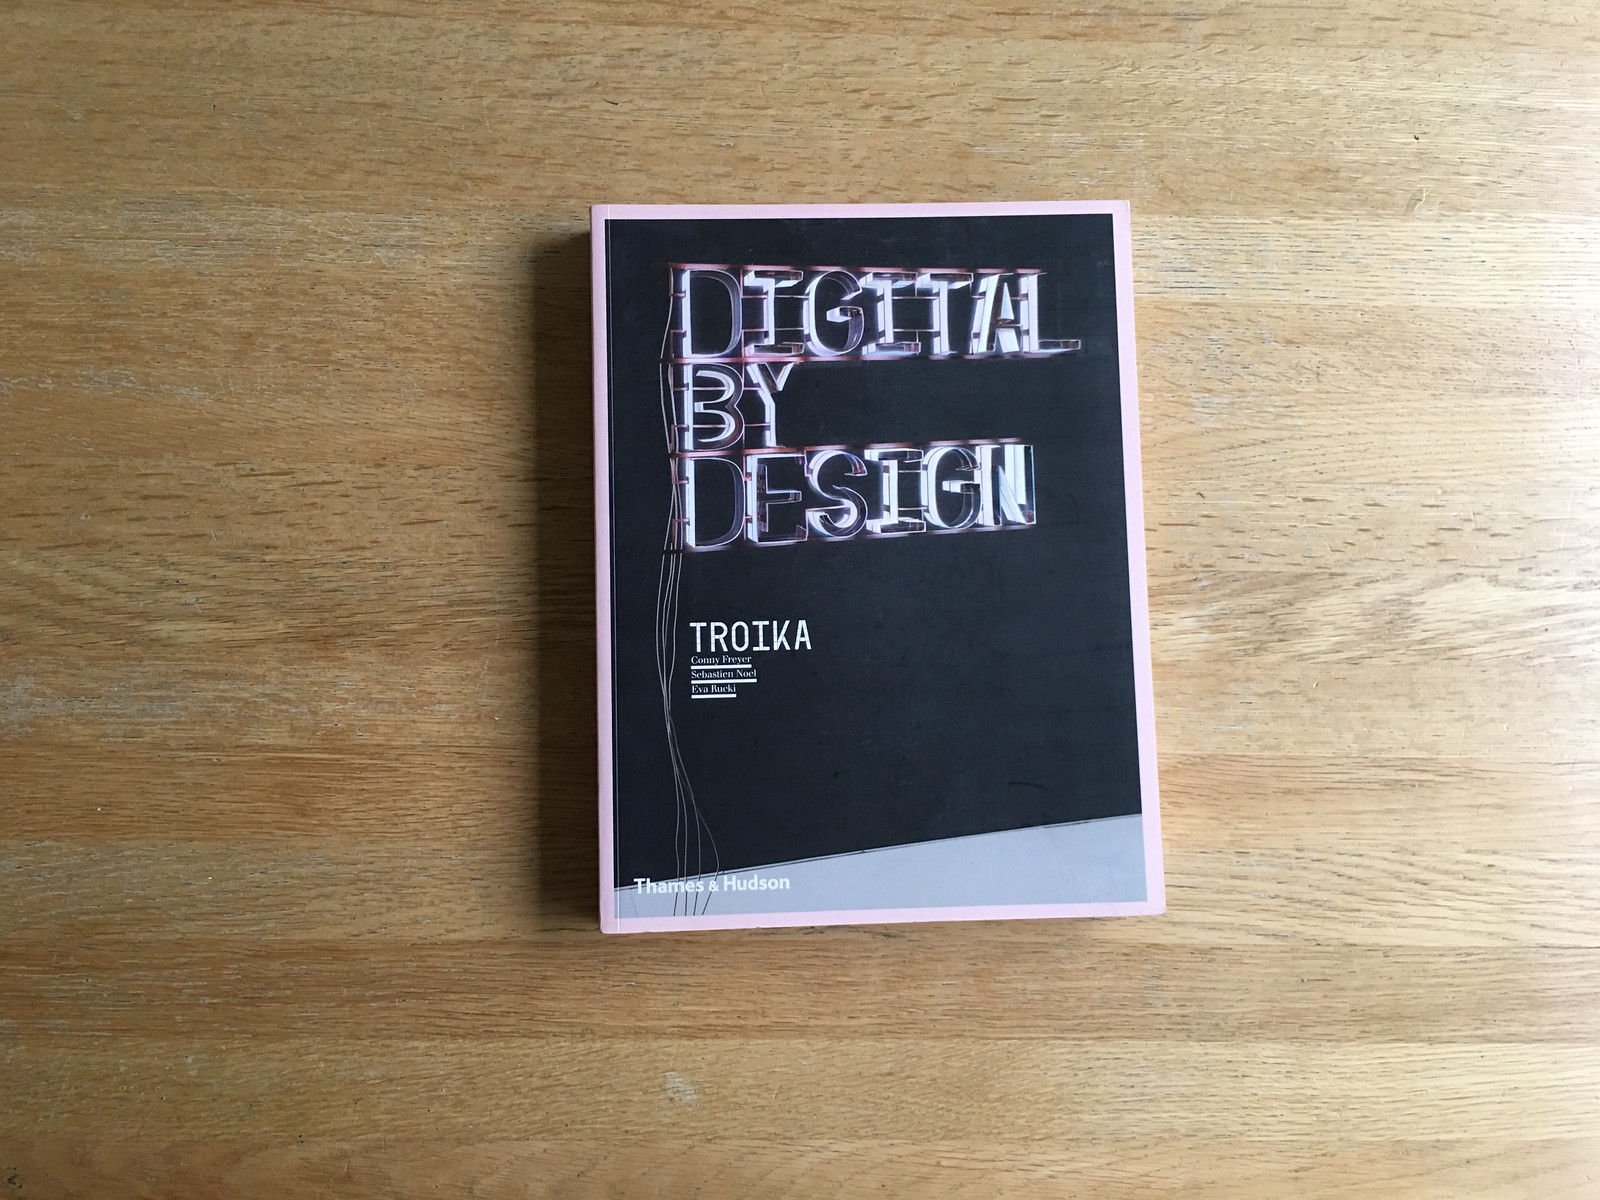 Digital by design: Troika